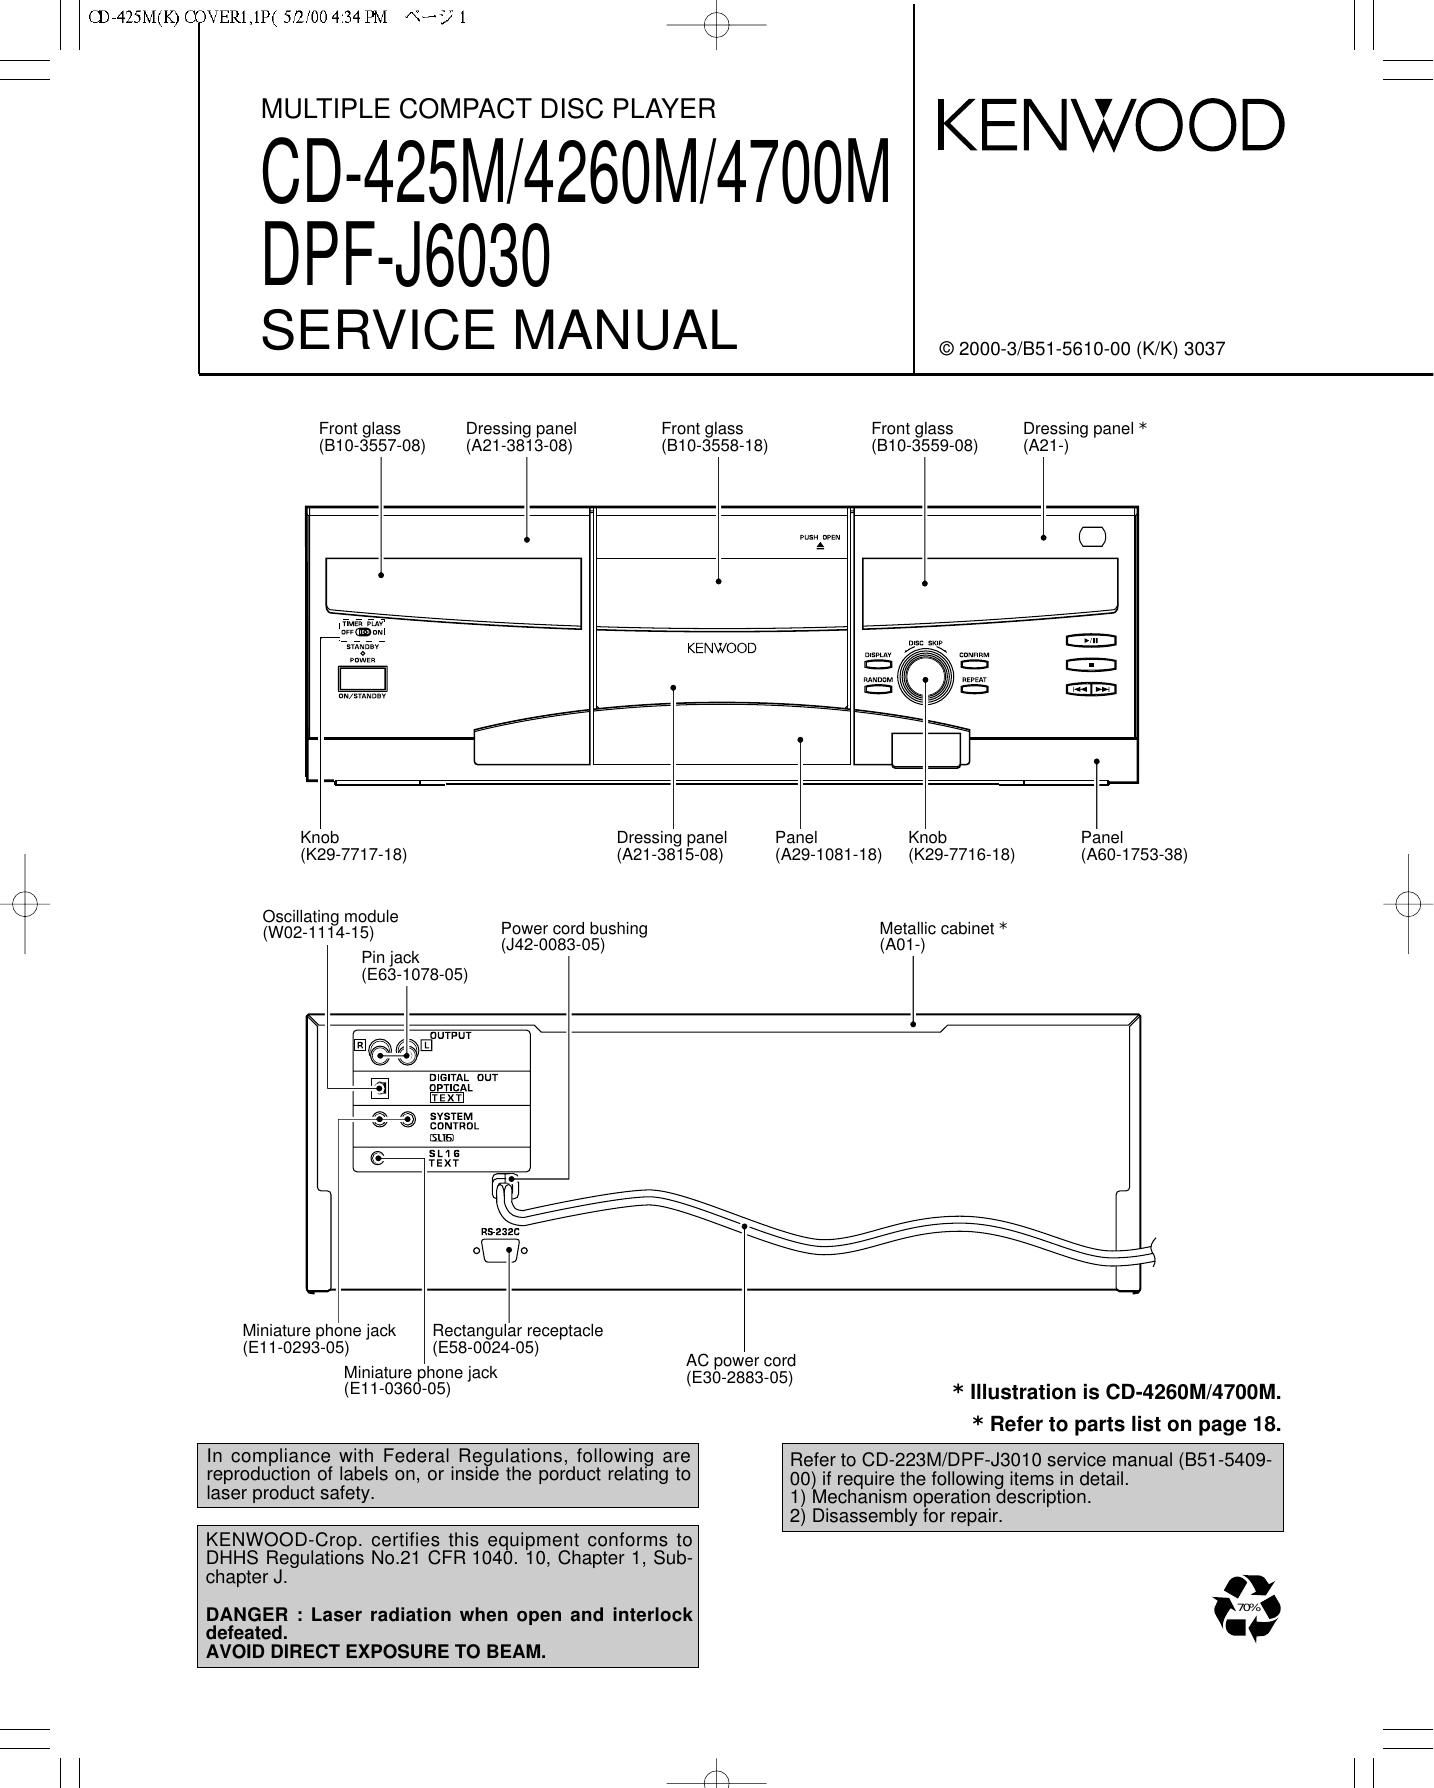 Kenwood DPFJ 6030 Service Manual